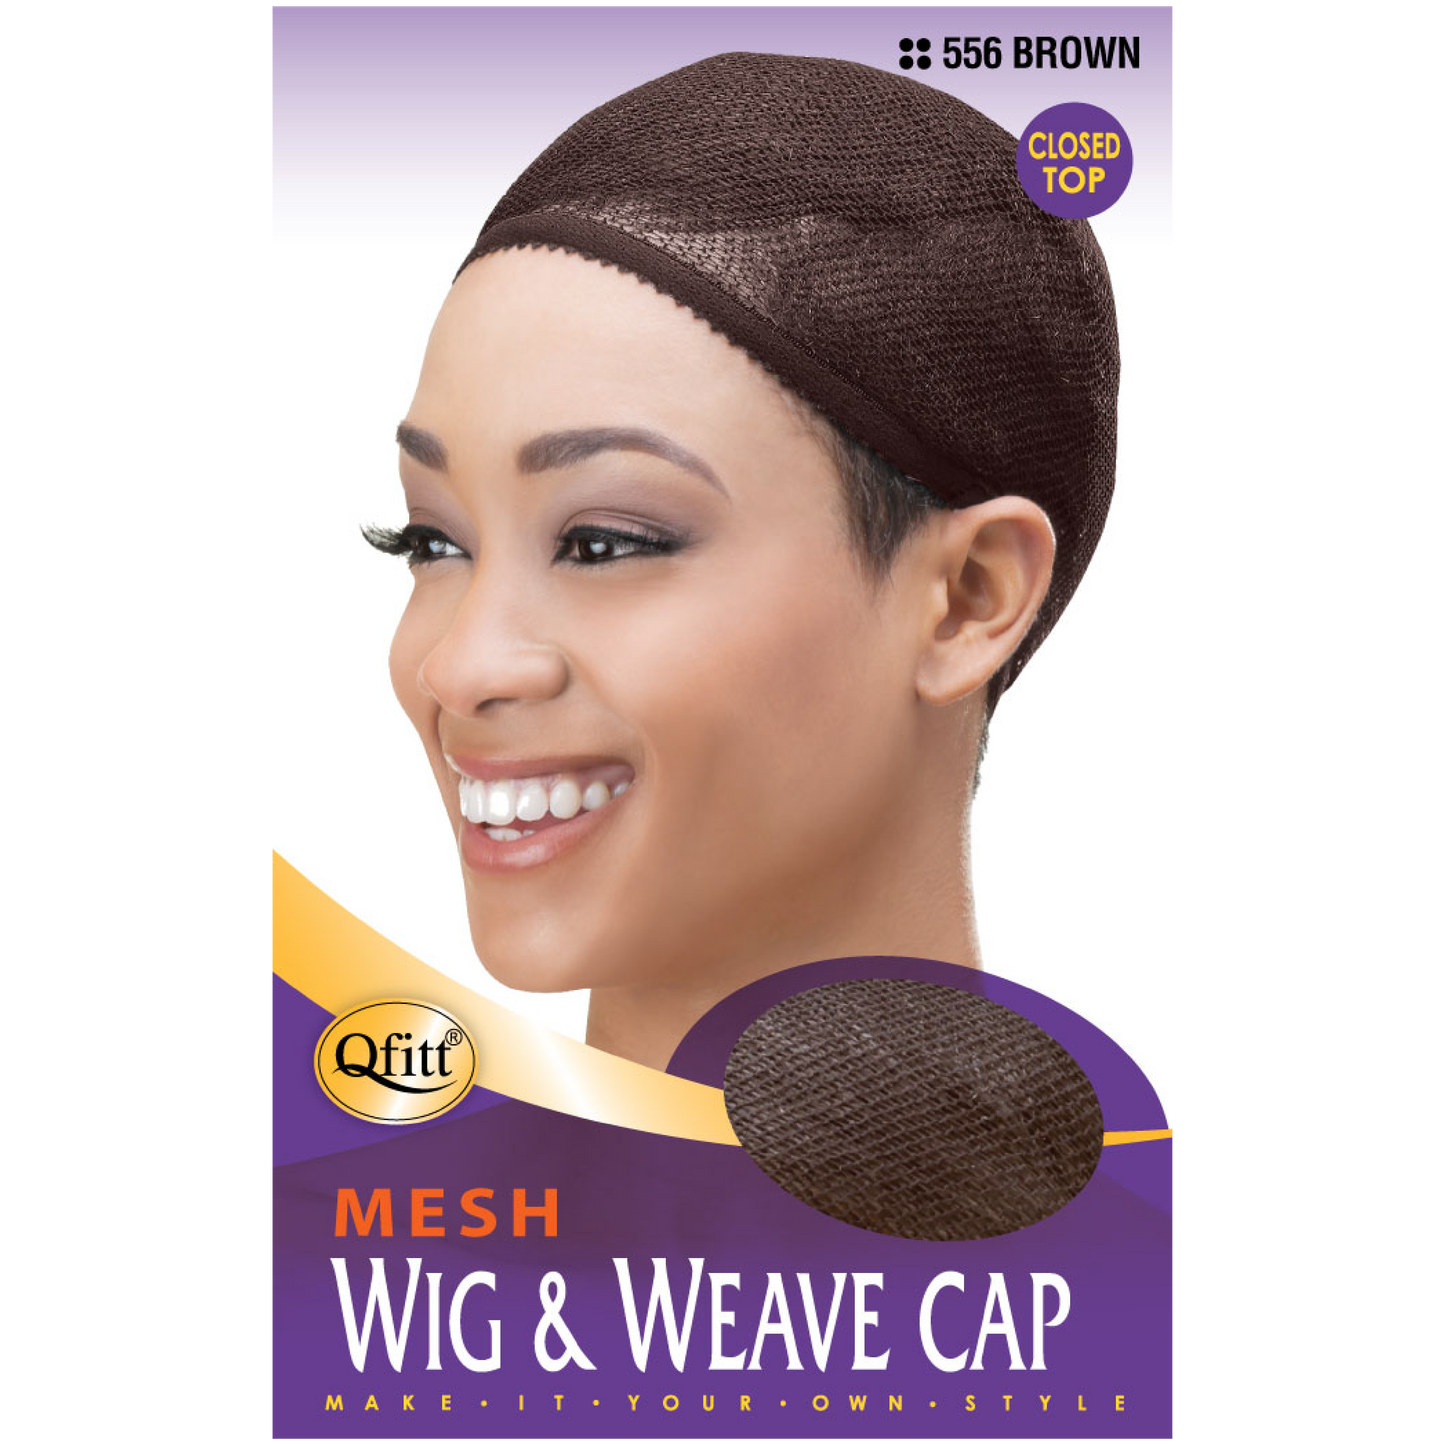 Qfitt Mesh Wig & Weave Cap - Brown